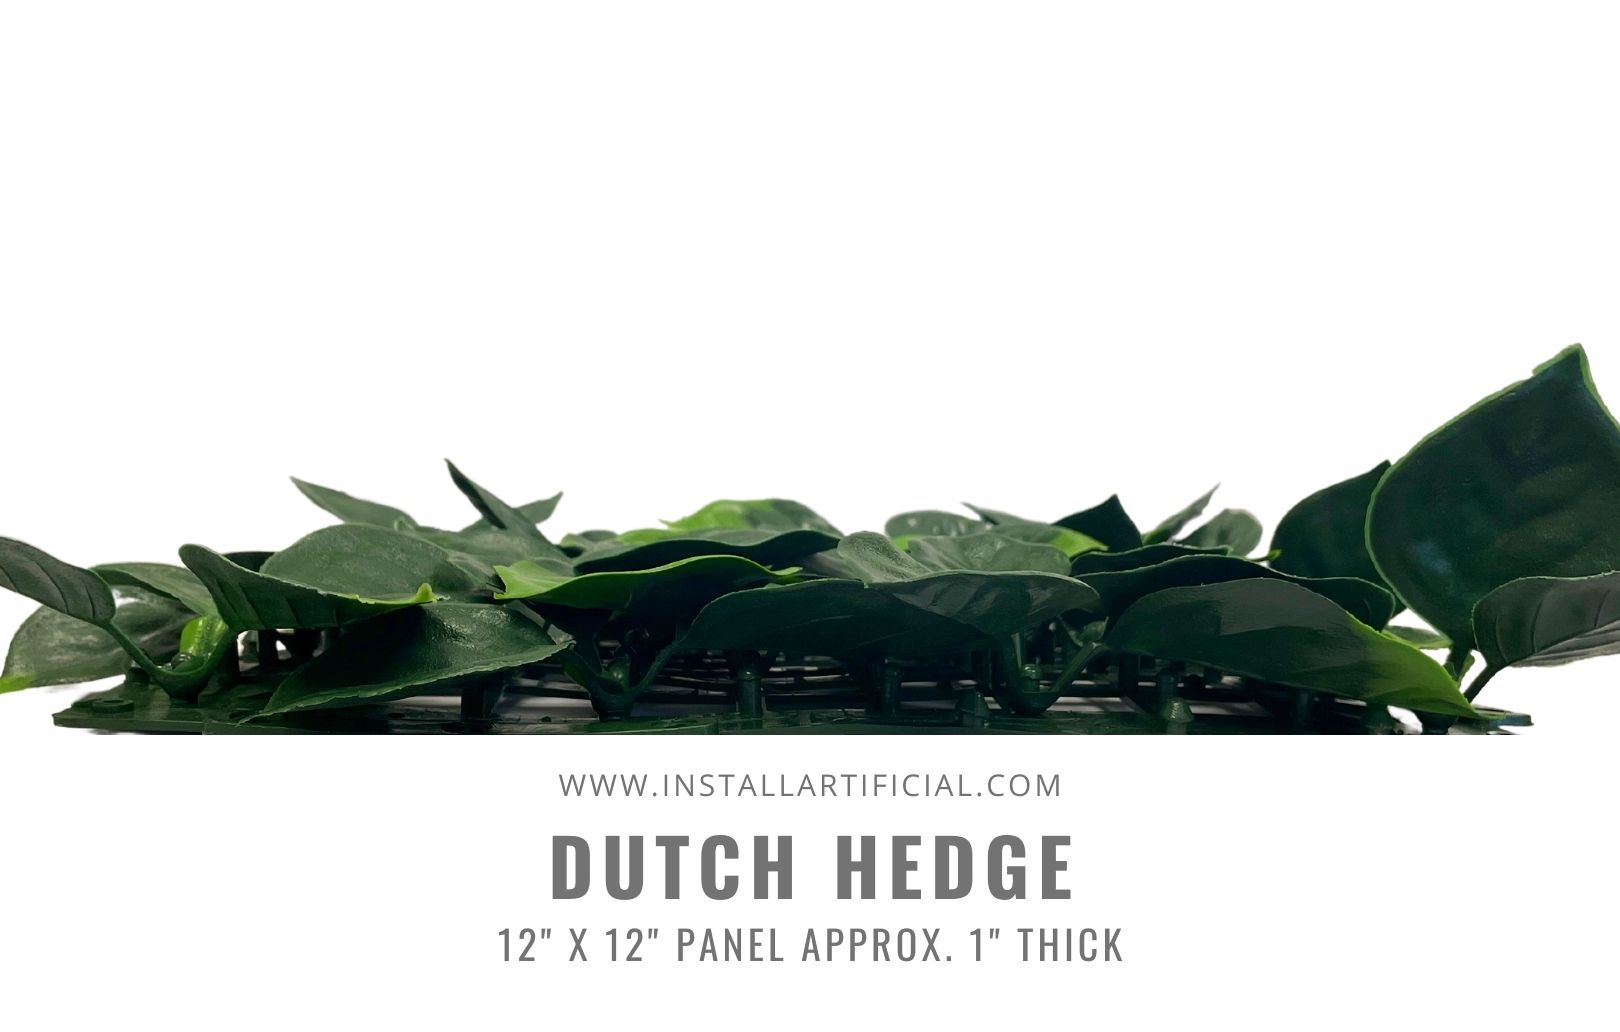 Dutch Hedge Artificial Ivy Global Syn Turf Side